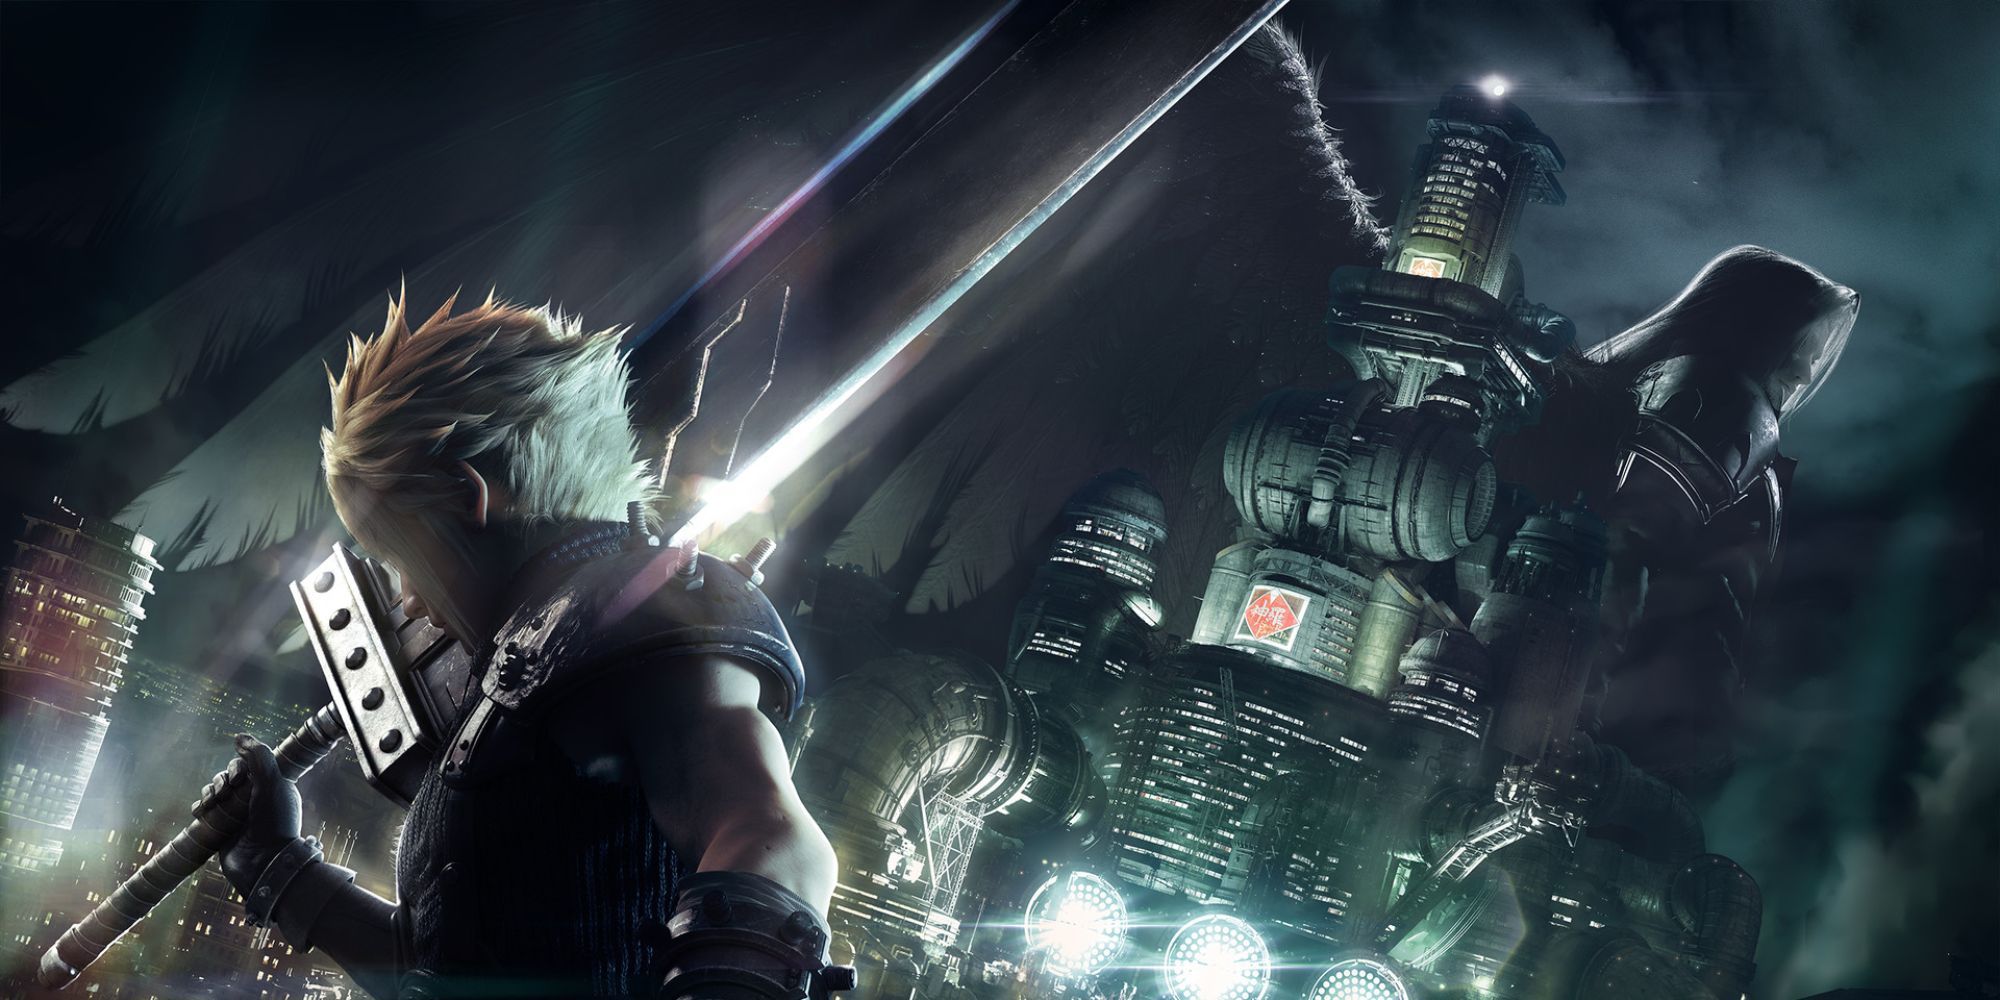 Square Enix Action RPG Final Fantasy 7 Remake official art